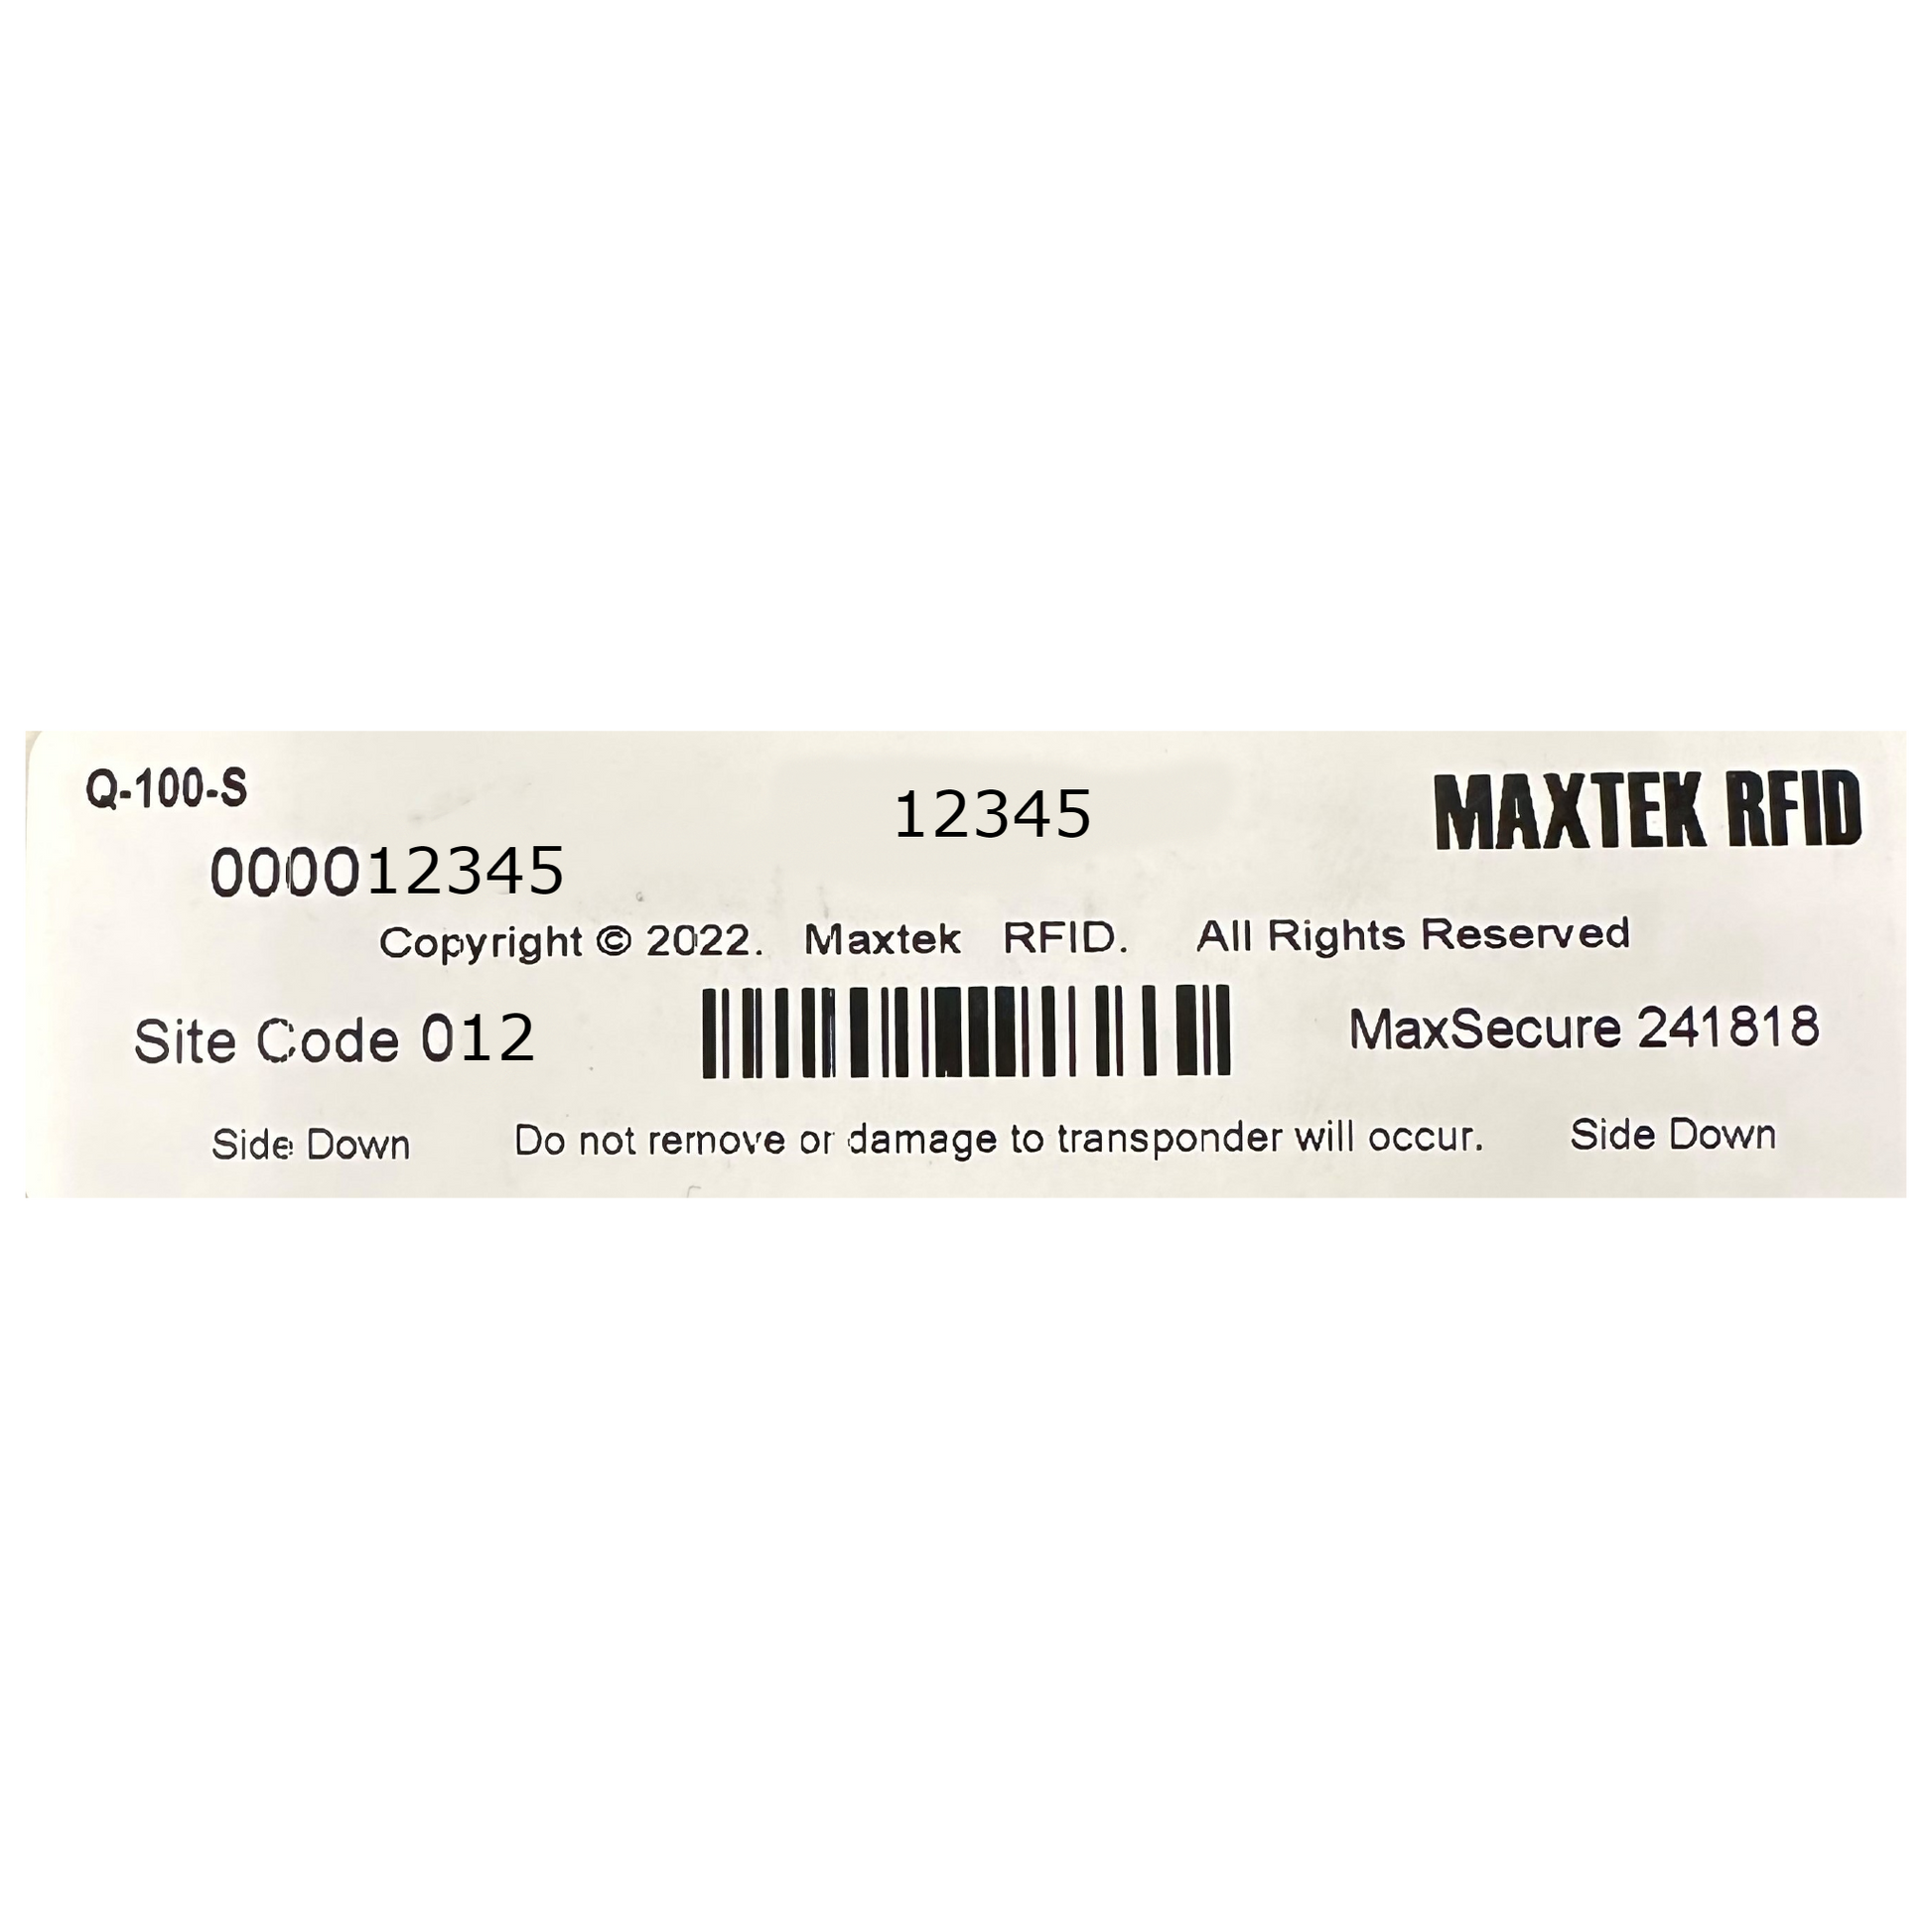 MAXTEX RFID maxsecure 241818 Site code Maxtek RFID tag windshield tag RFID Tag Q-100-S UHF tag Windshield parking tag cloning copy by serial number easy and convenient Maxtek RFID tag